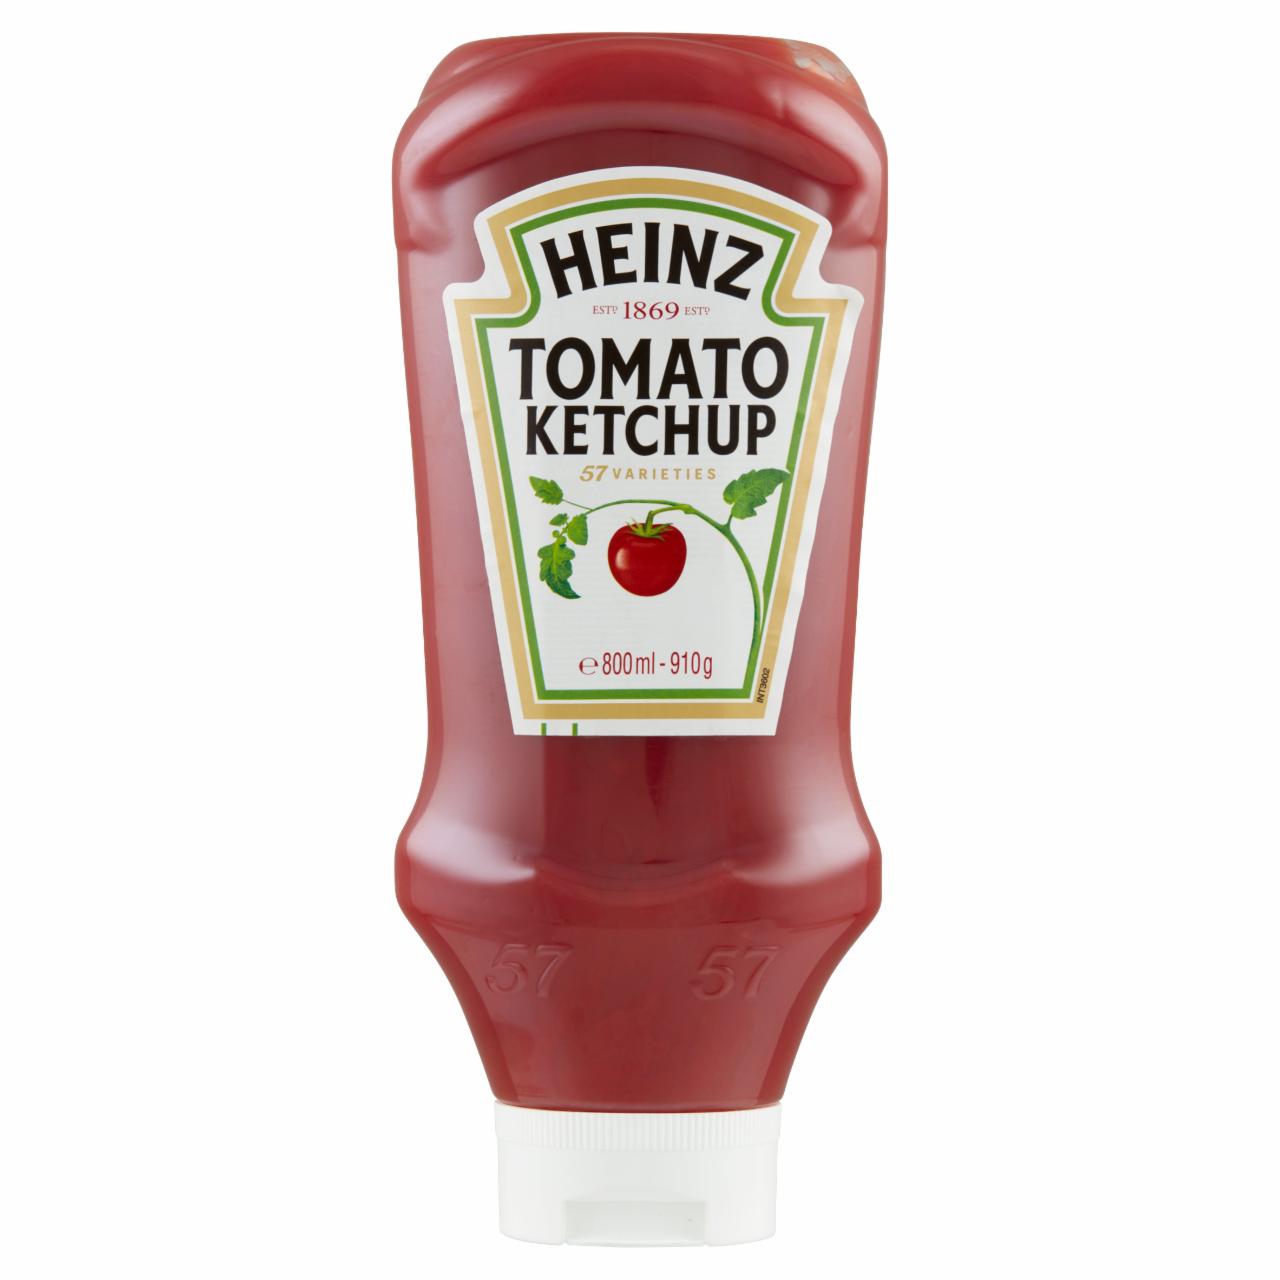 Zdjęcia - Tomato ketchup łagodny Heinz